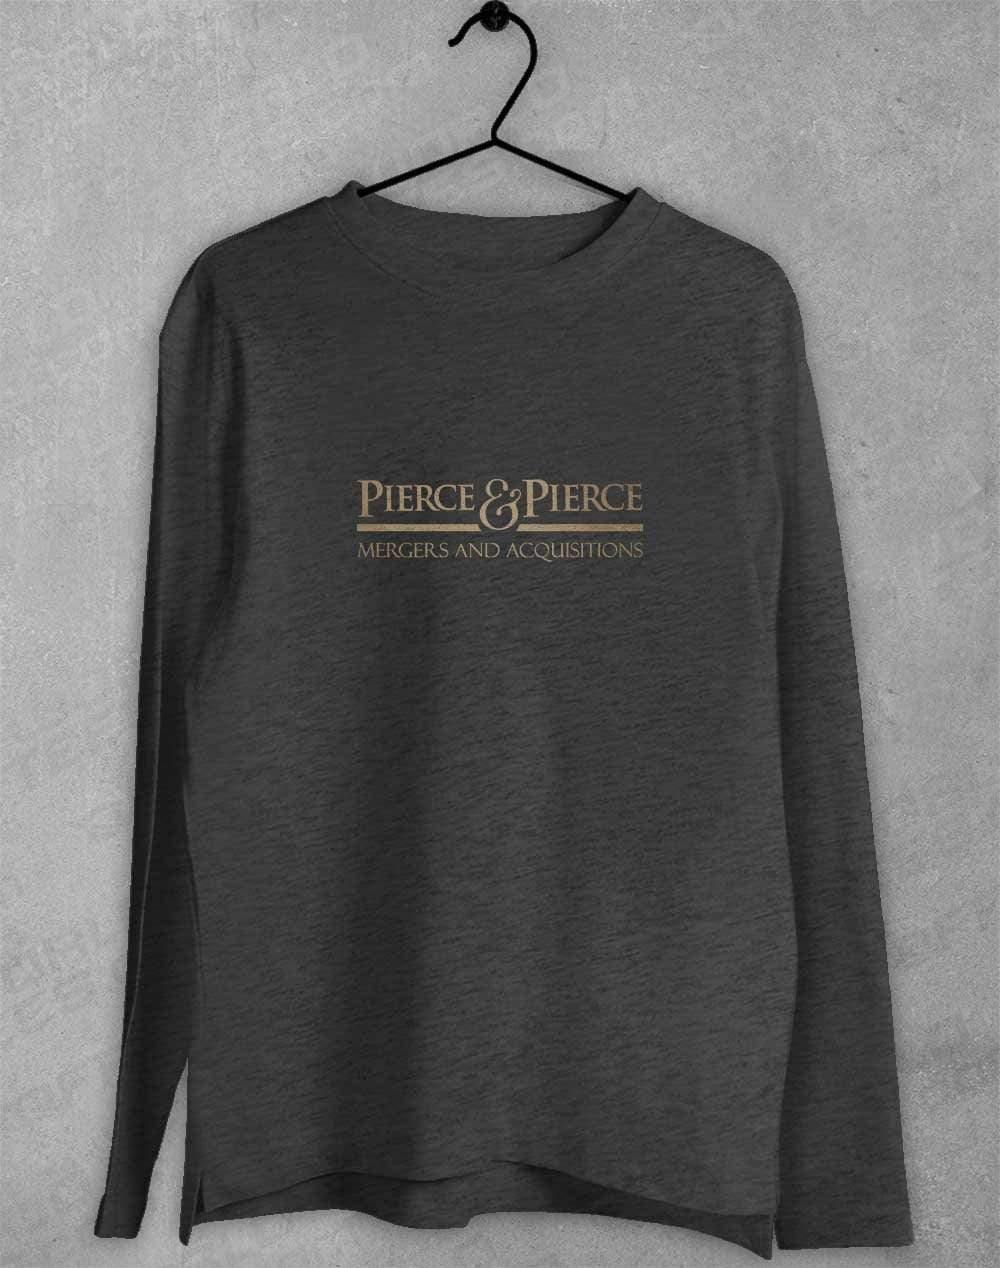 Pierce and Pierce Long Sleeve T-Shirt S / Dark Heather  - Off World Tees